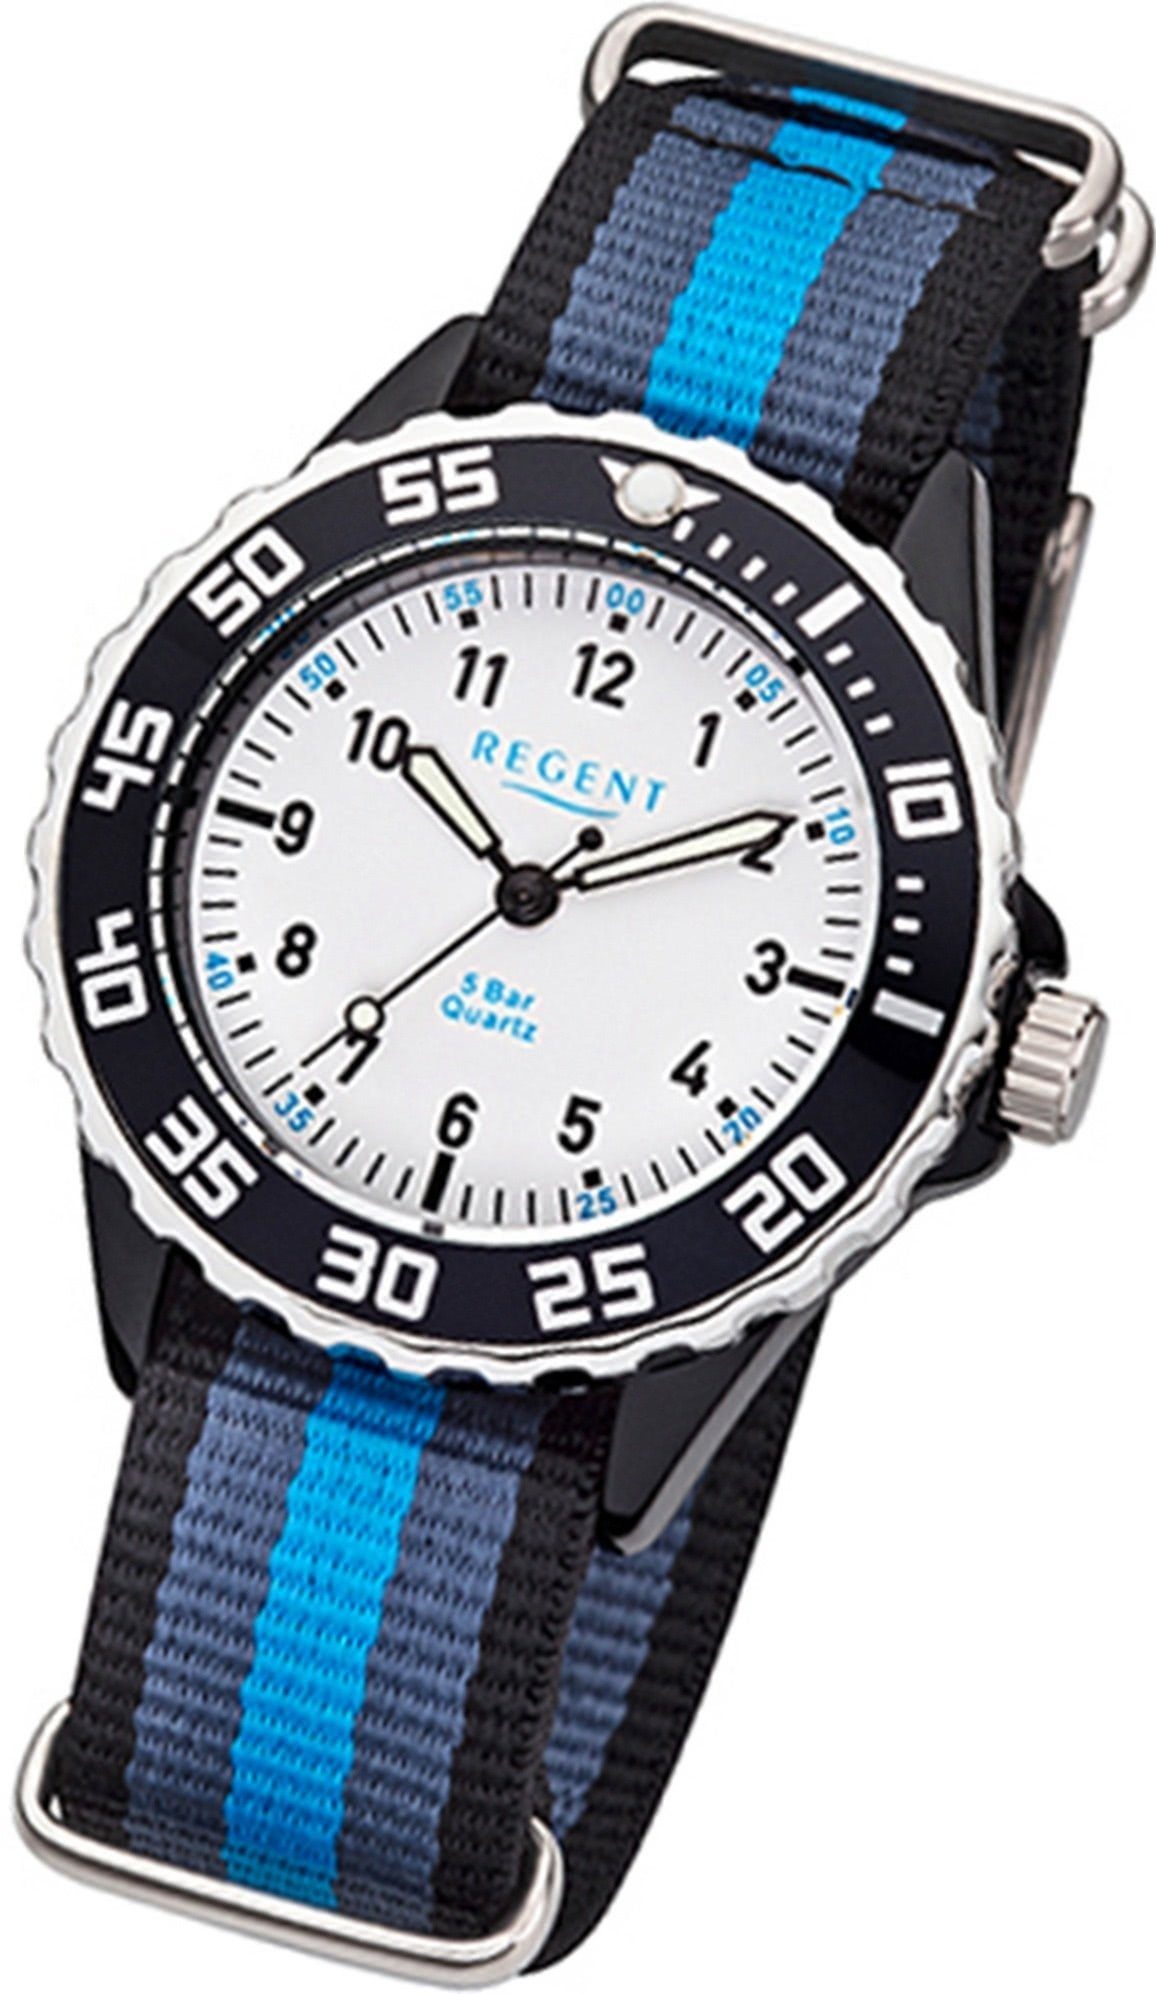 Regent Quarzuhr Regent Textil Kinder-Jugend Uhr F-1204, (Analoguhr), Kinderuhr Textilarmband blau, schwarz, rundes Gehäuse, mittel (35mm)